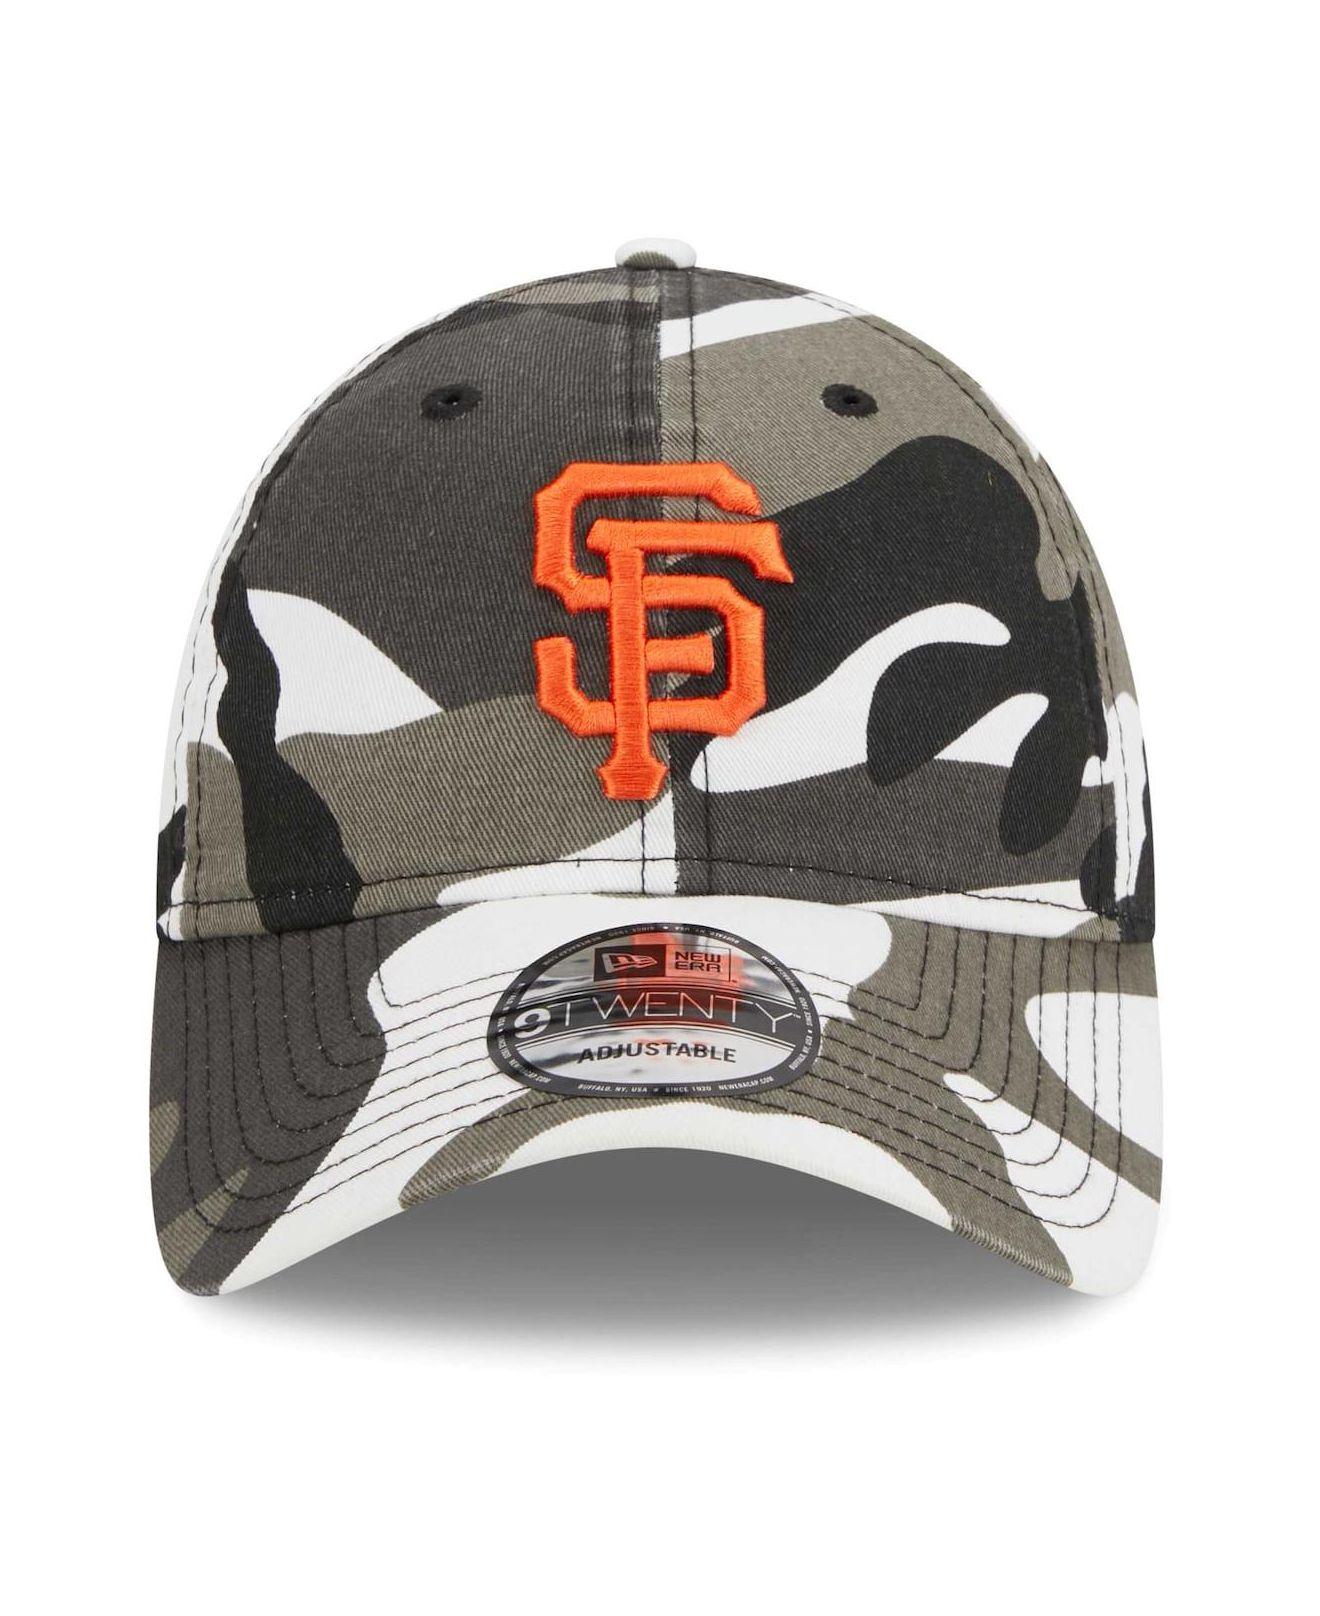 New Era Men's San Diego Padres Camo 9twenty Adjustable Hat